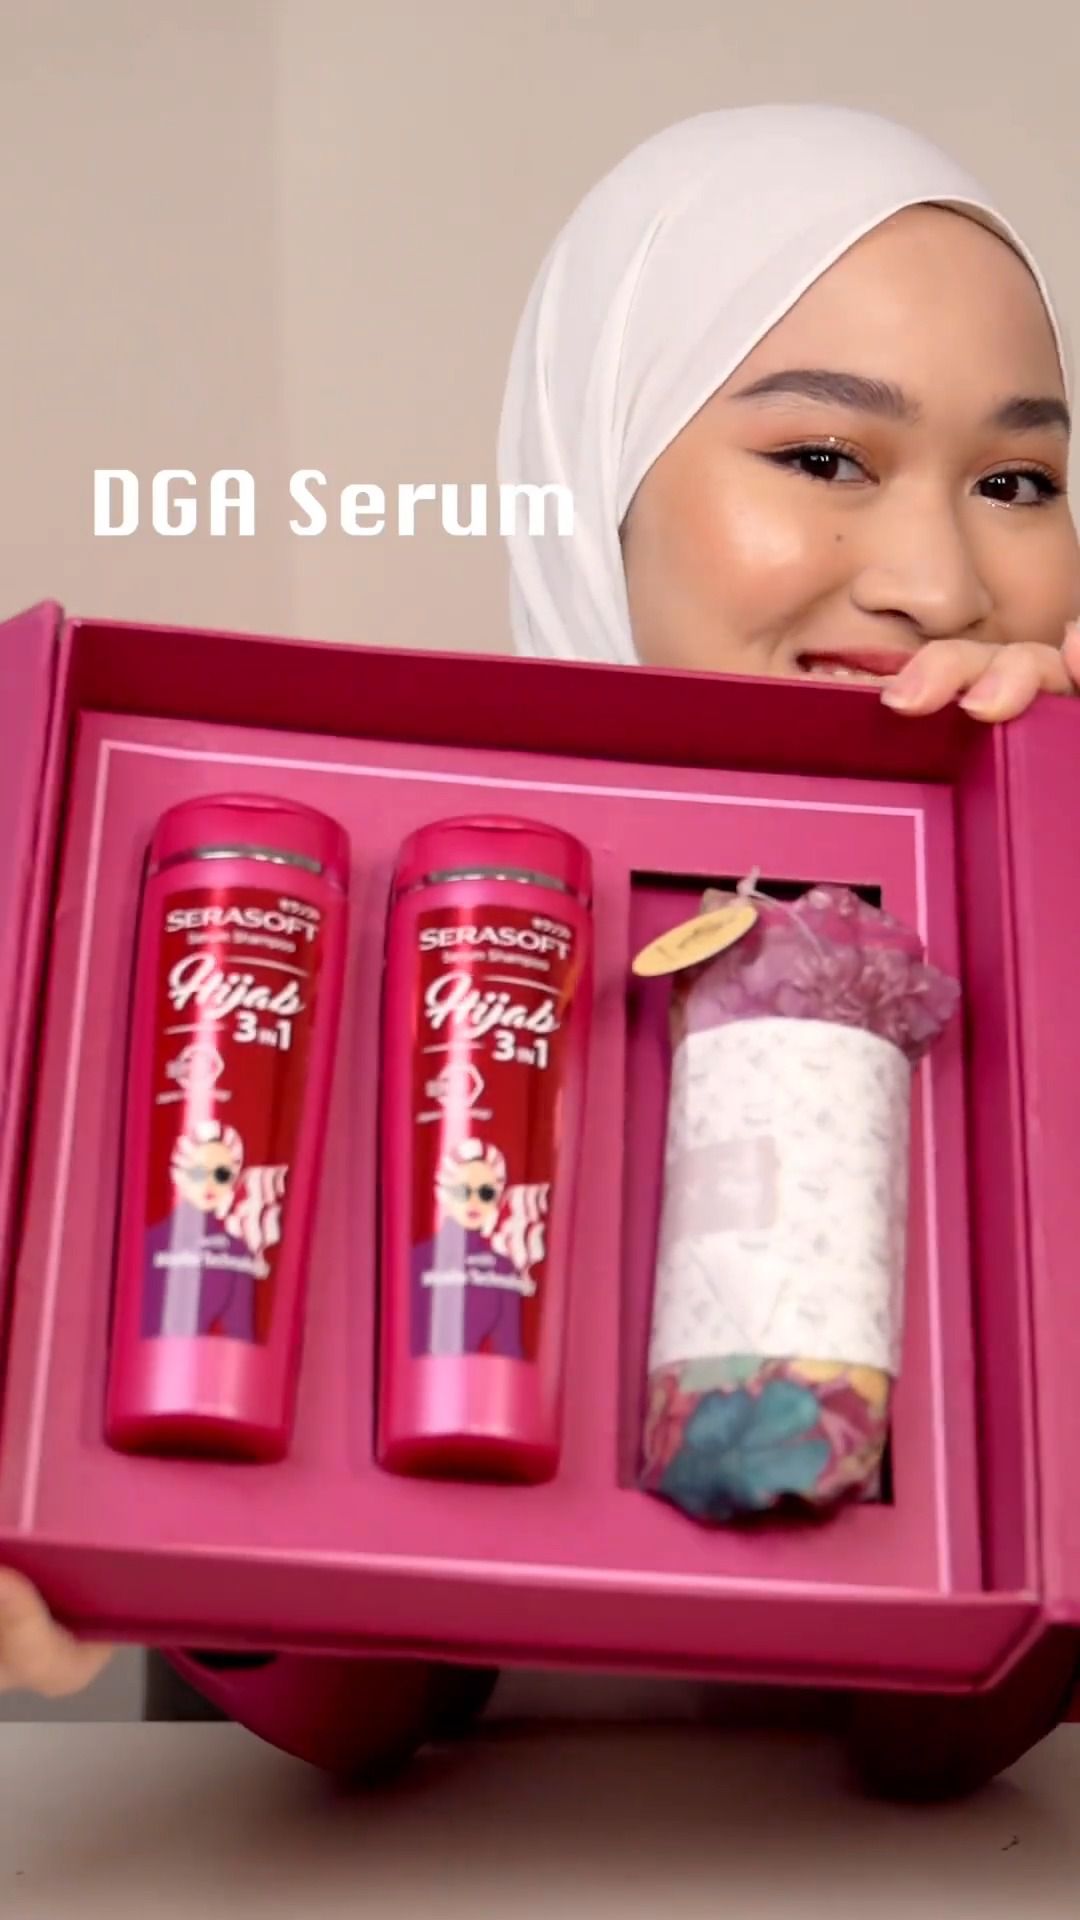 Serasoft Serum Shampoo Hijab 3in1